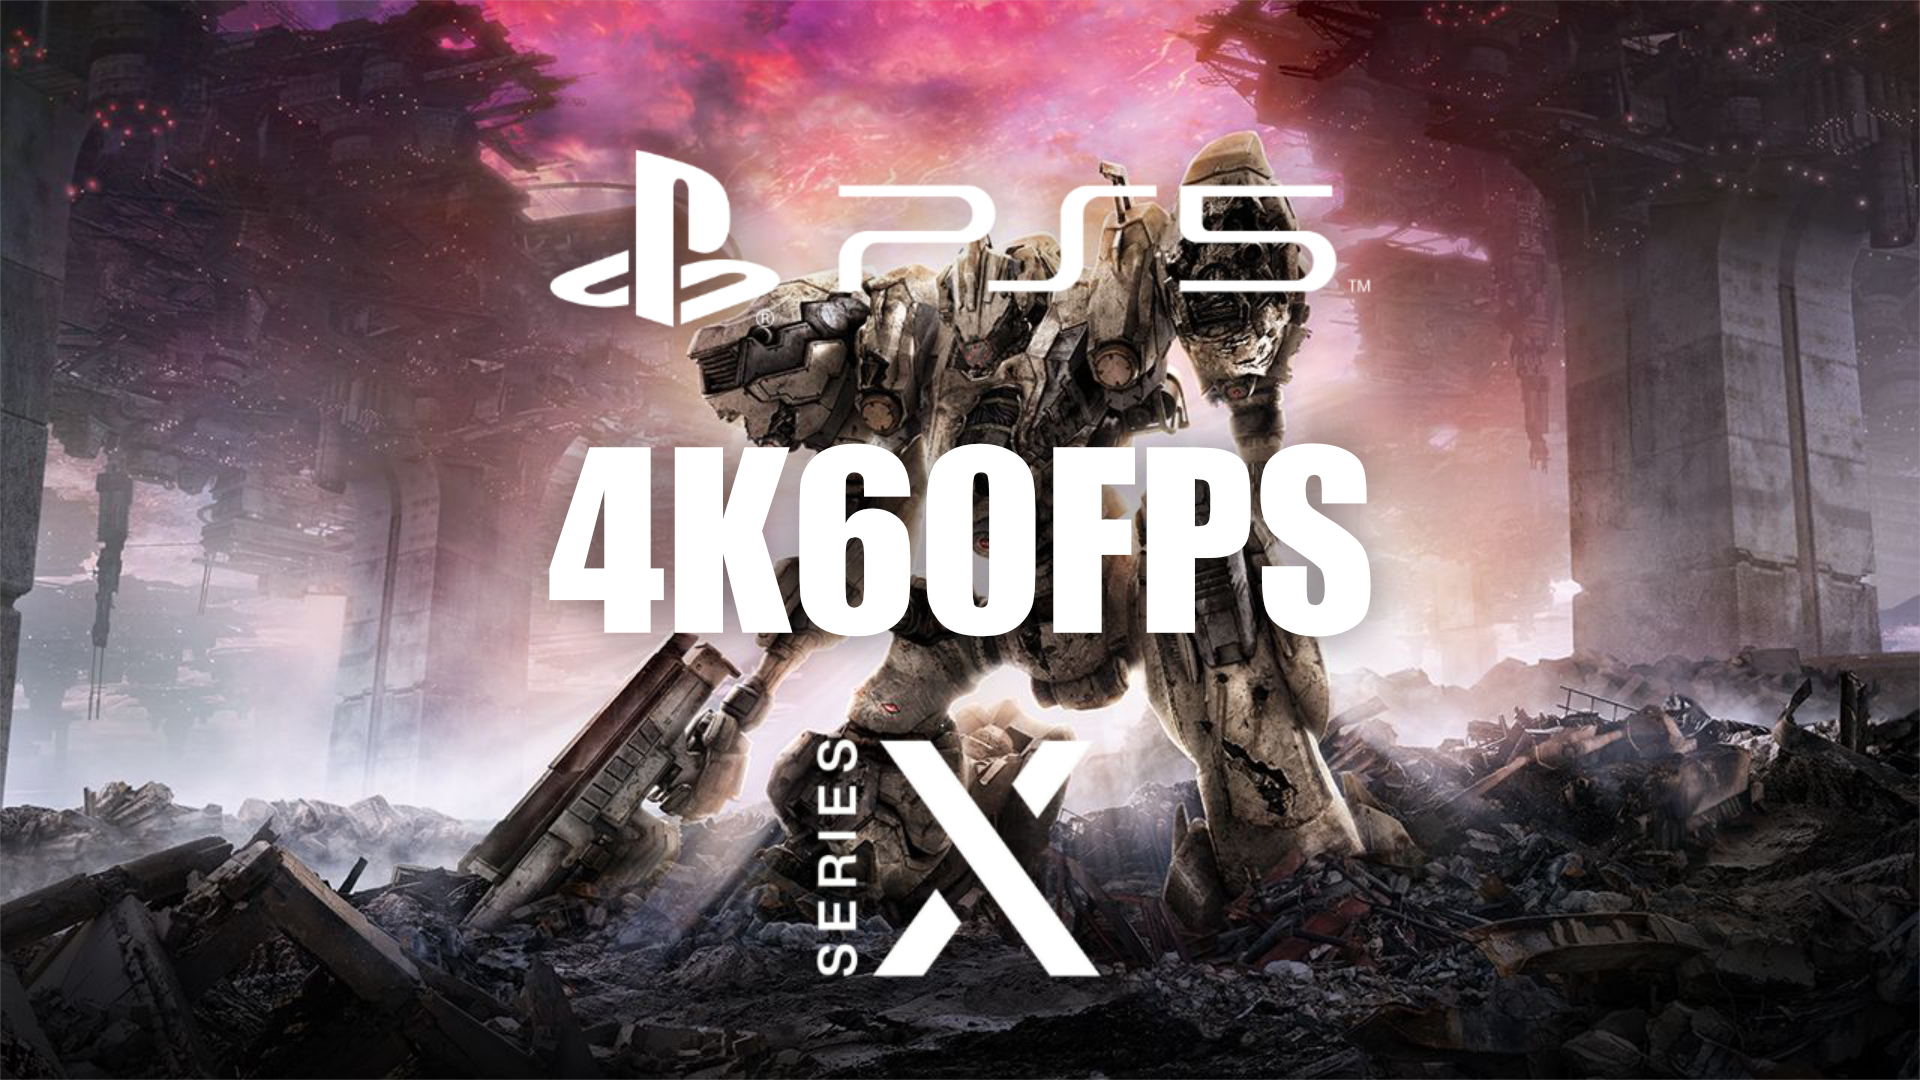 Ghost Recon Breakpoint gameplay en Xbox Series S 60 FPS